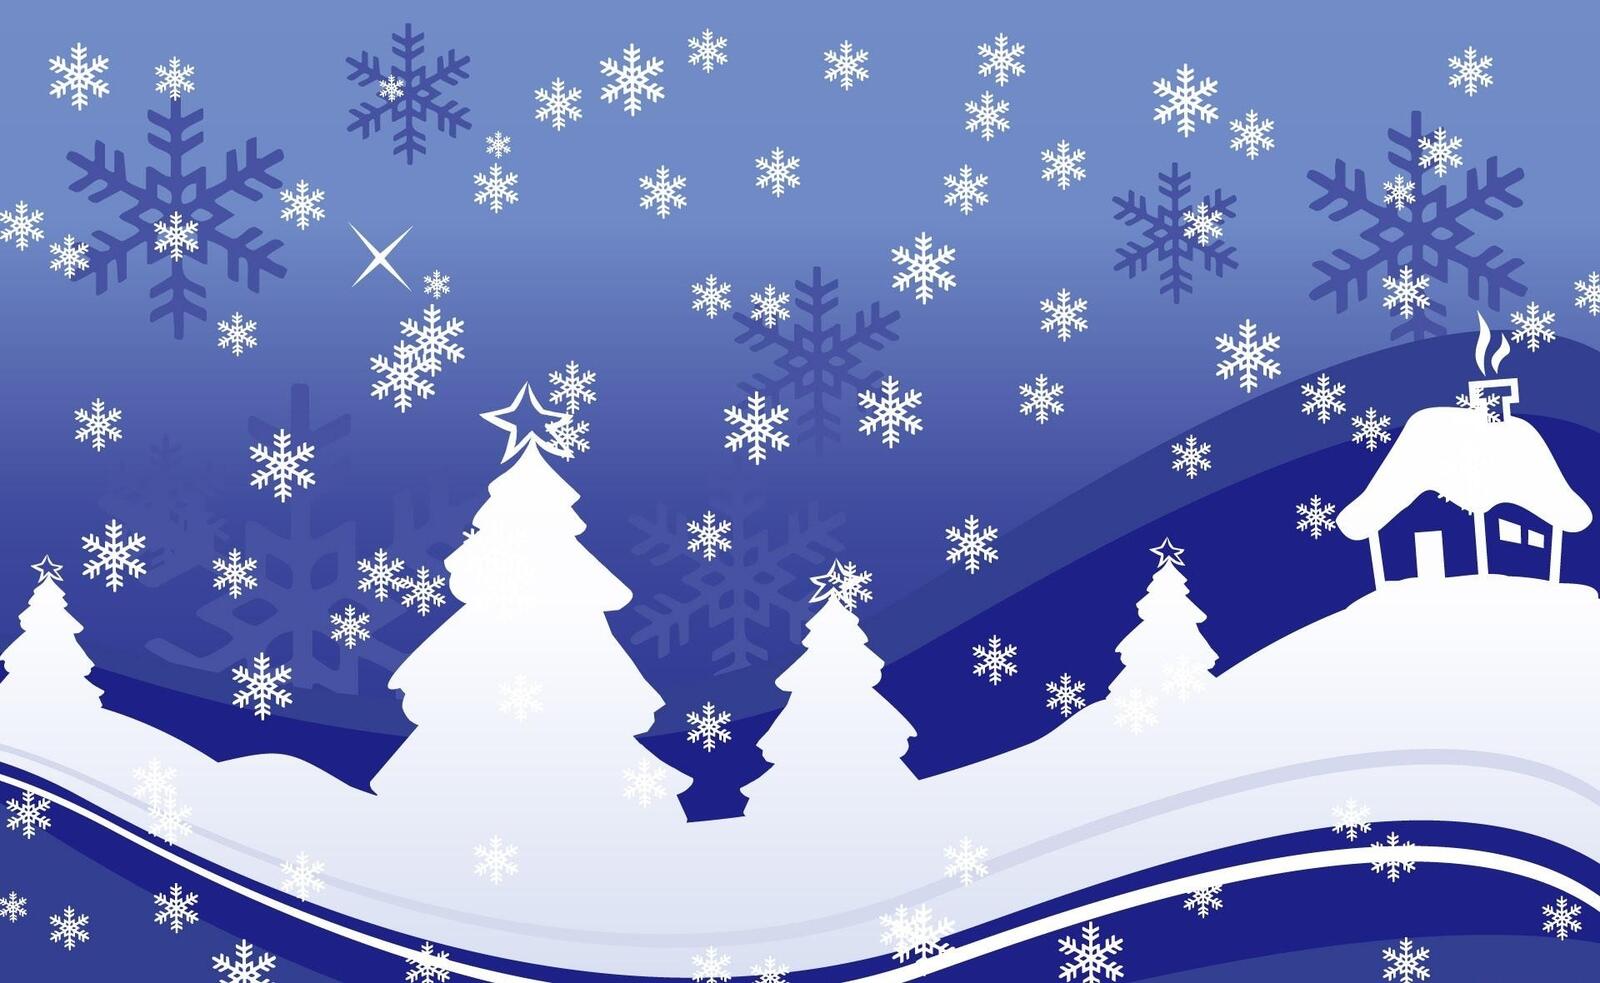 Wallpapers Christmas tree house snowflakes on the desktop